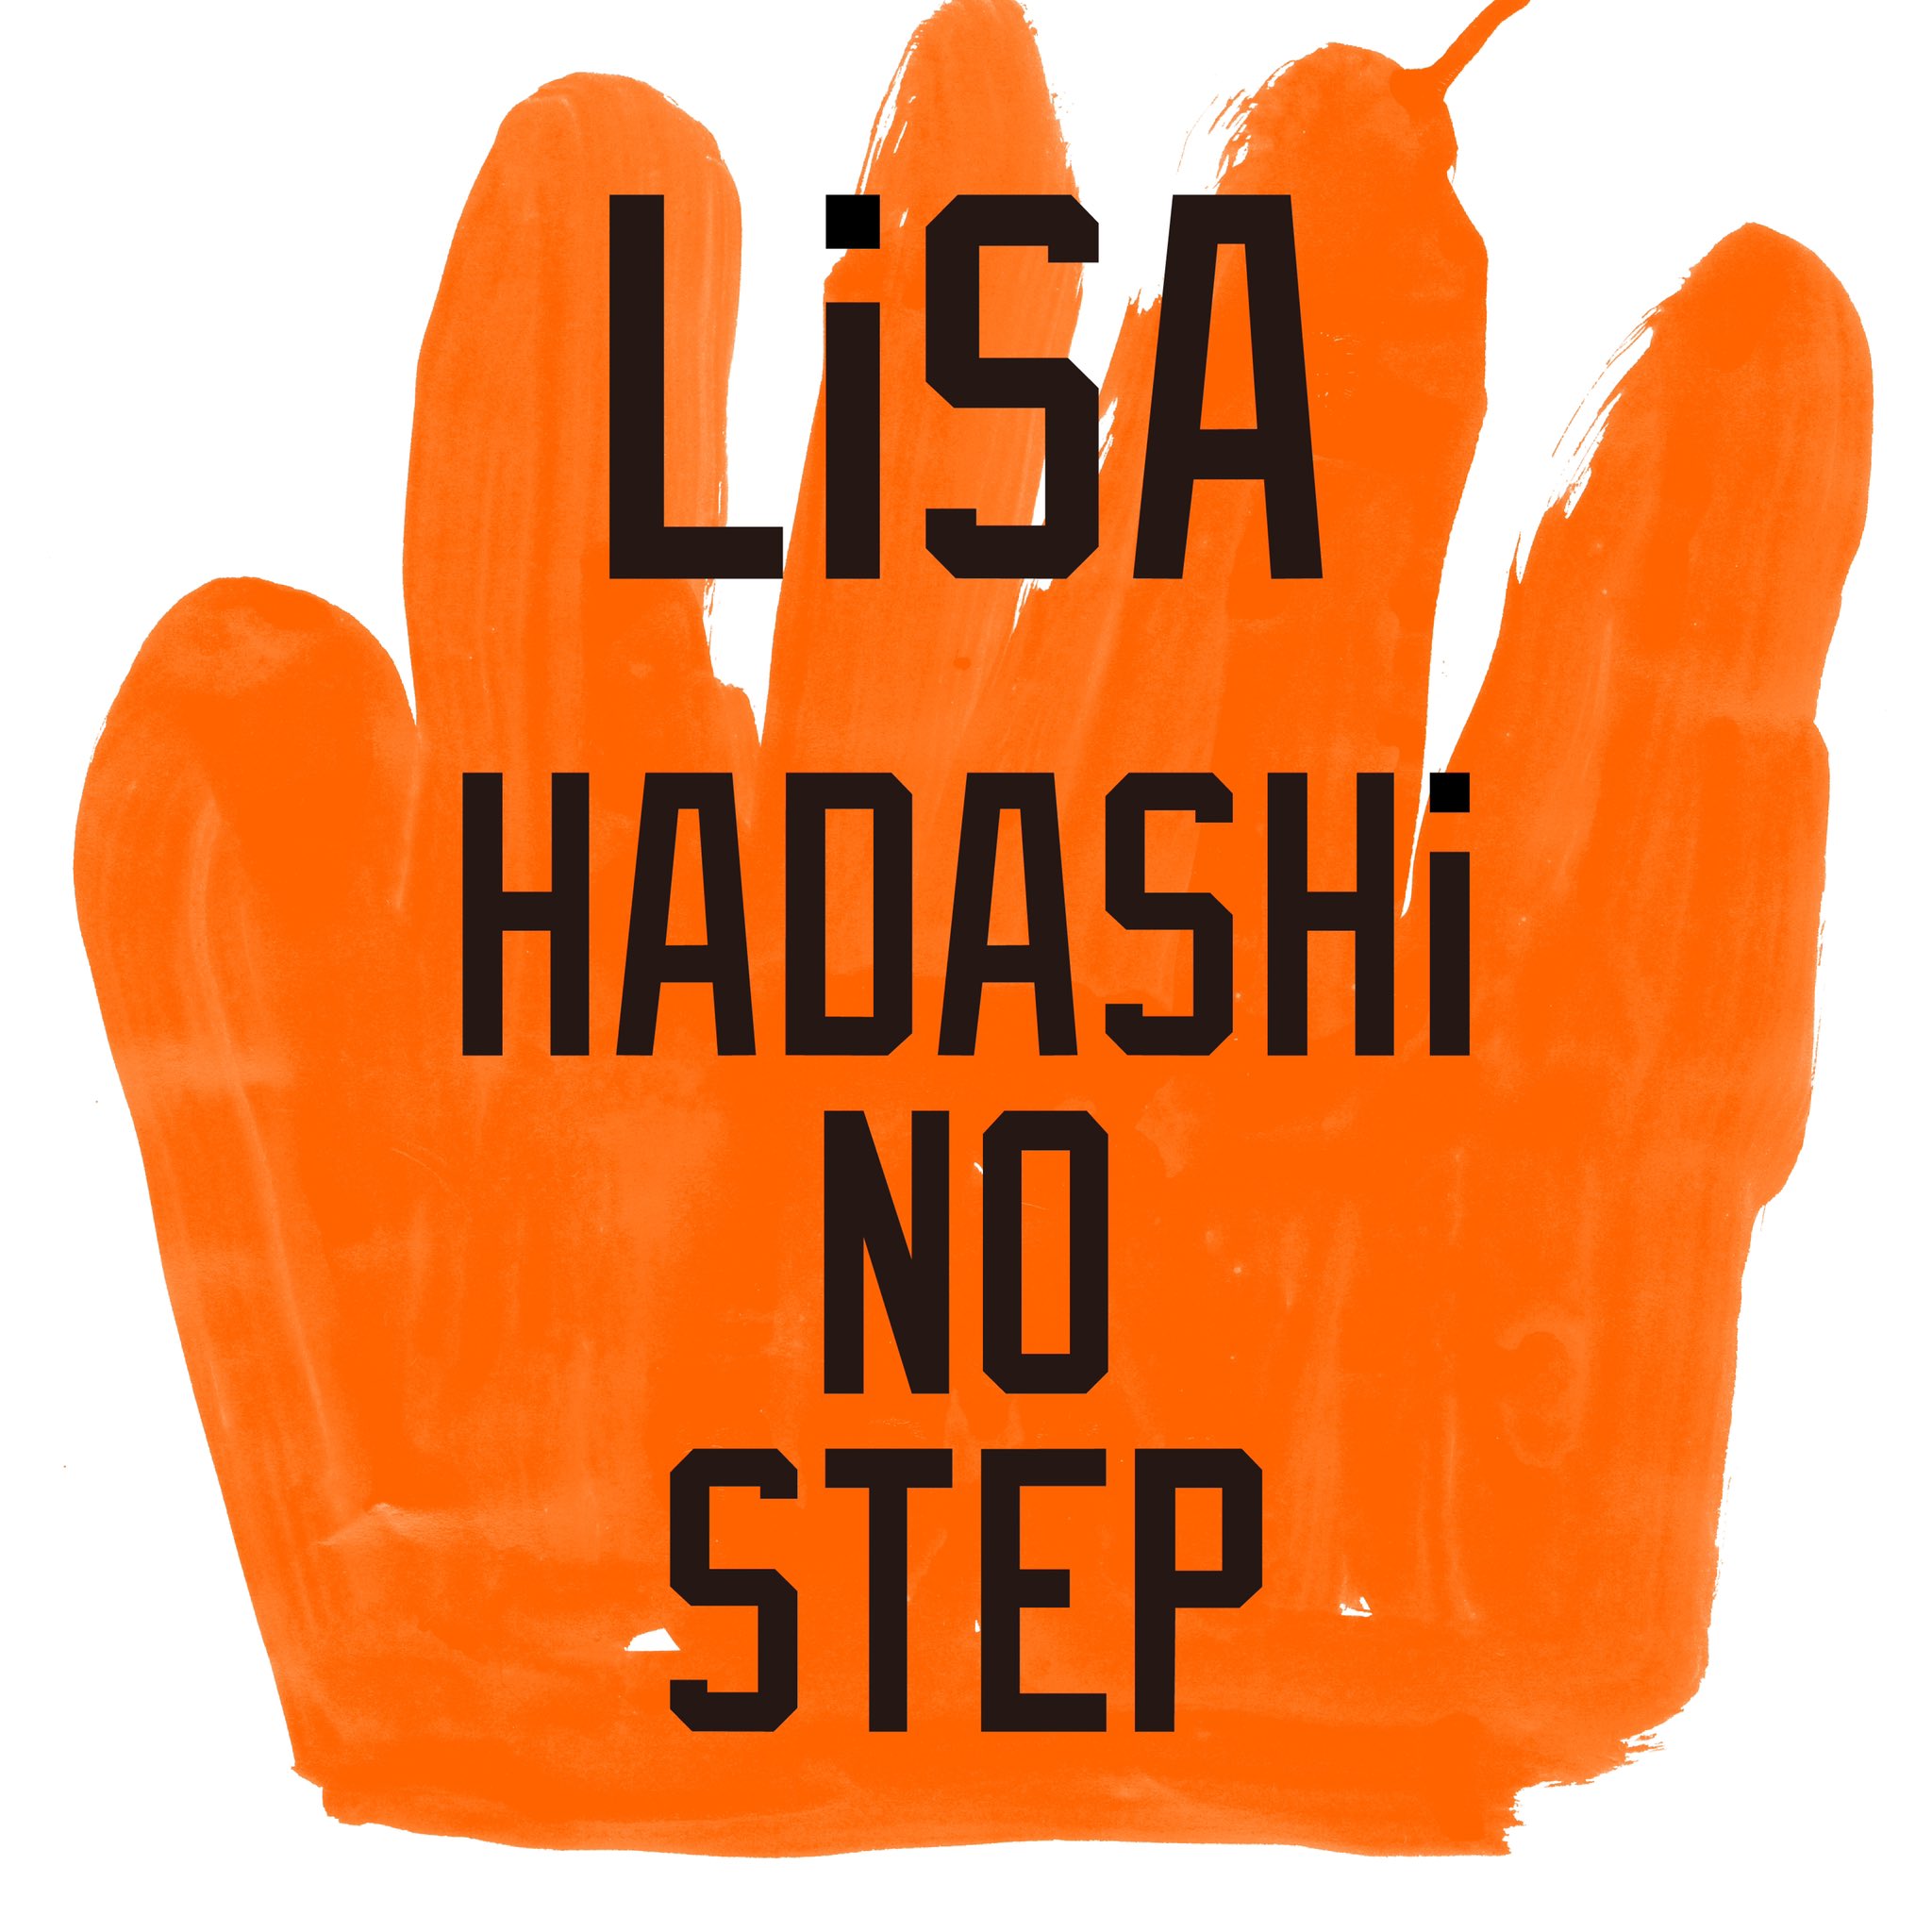 LiSA - HADASHi NO STEP